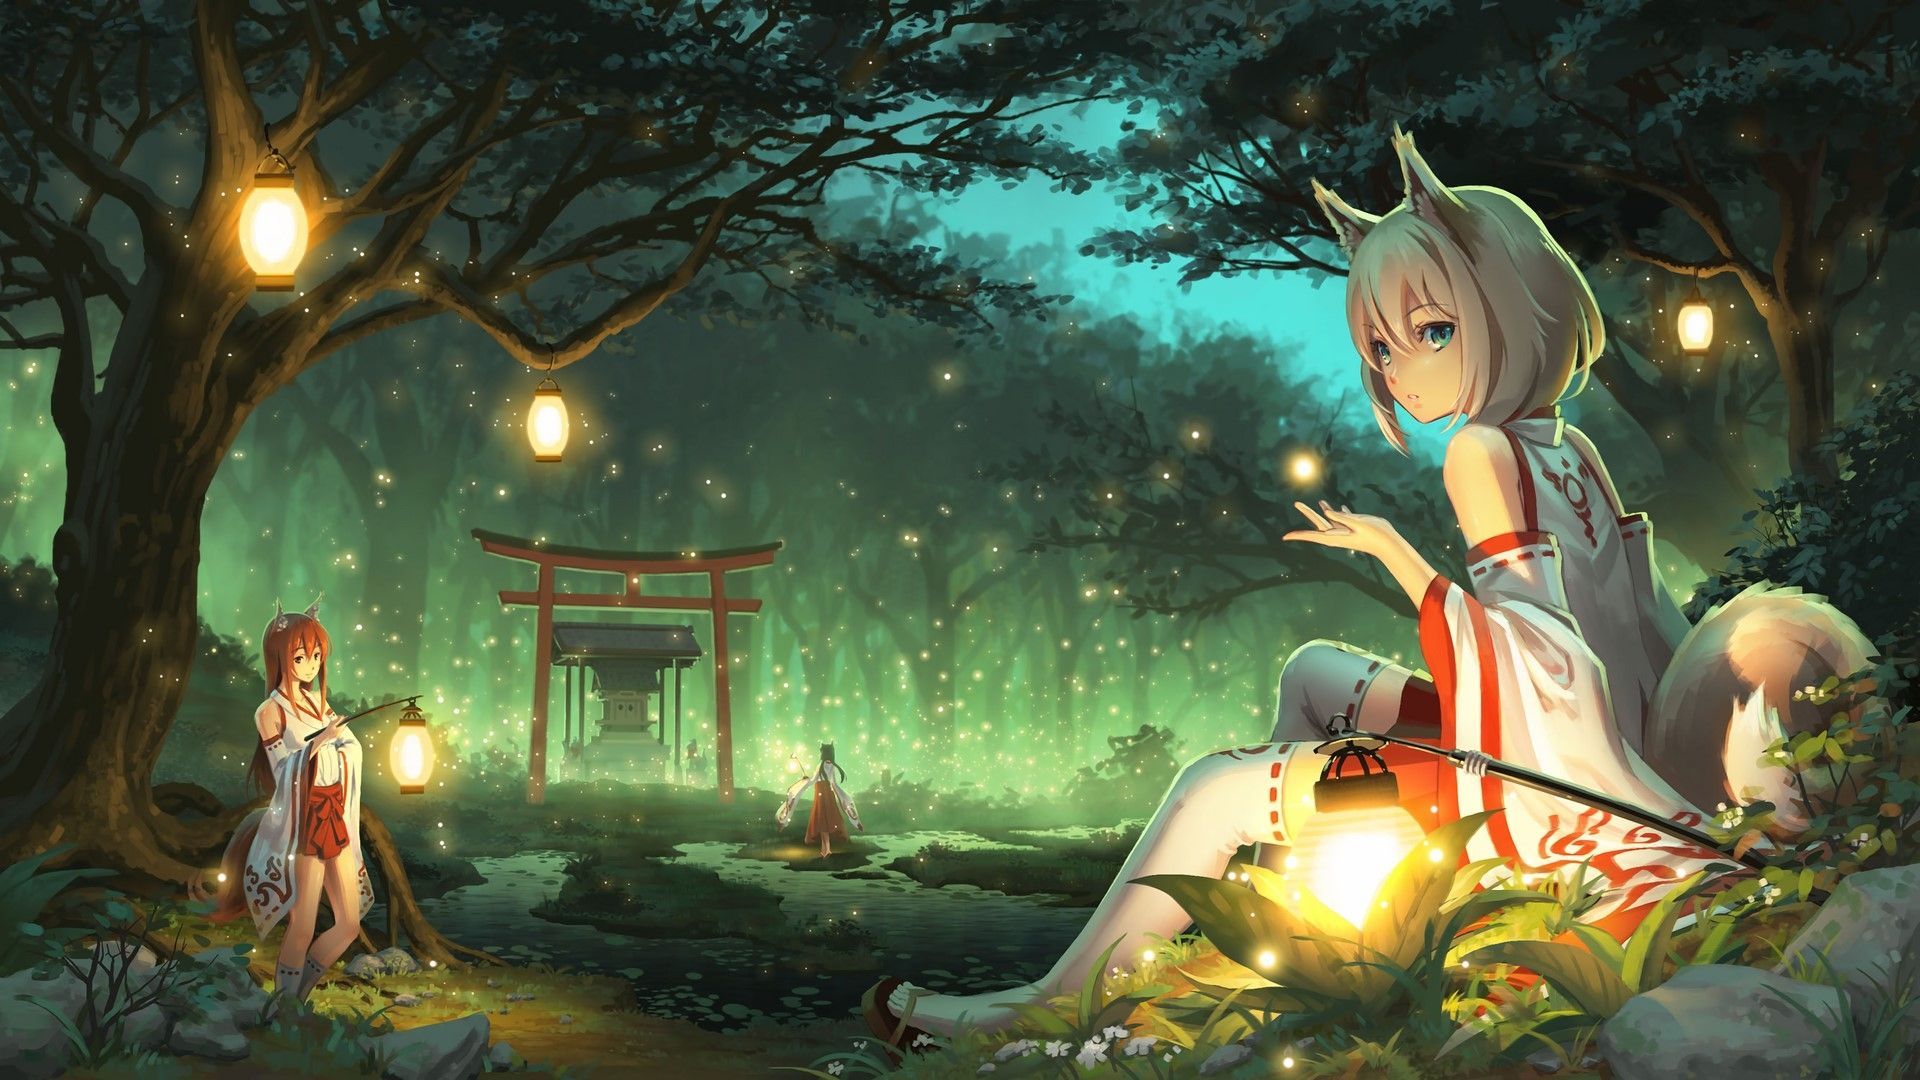 Night scene in an anime jungle with glowing orbs-demhanvico.com.vn